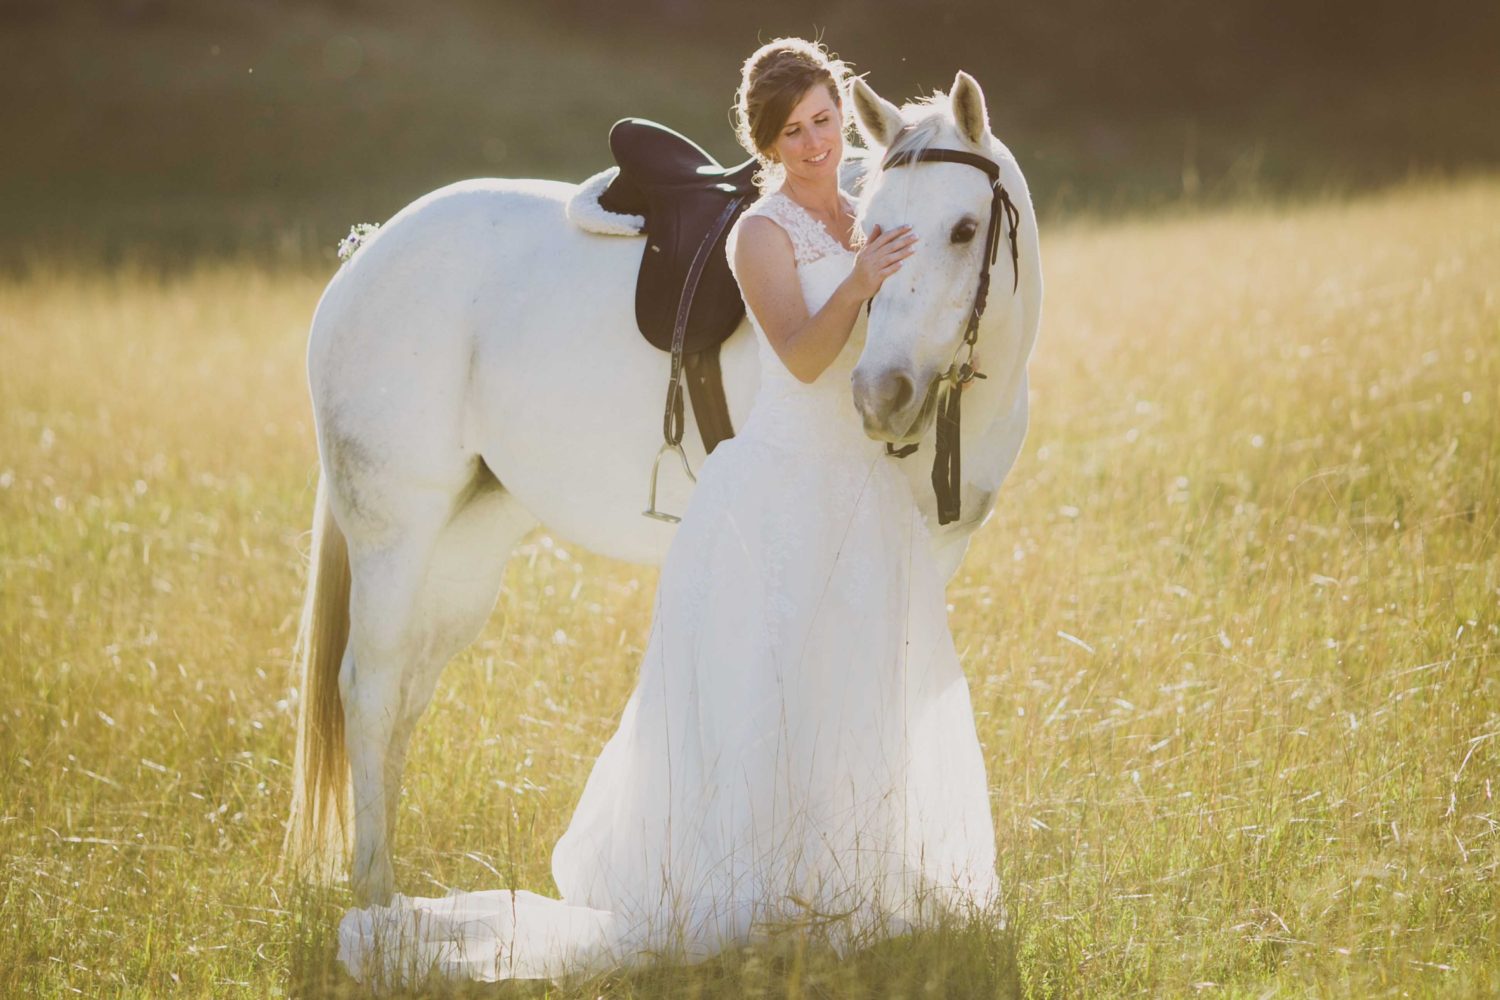 Jess And Greg’s Country Horseback Wedding!